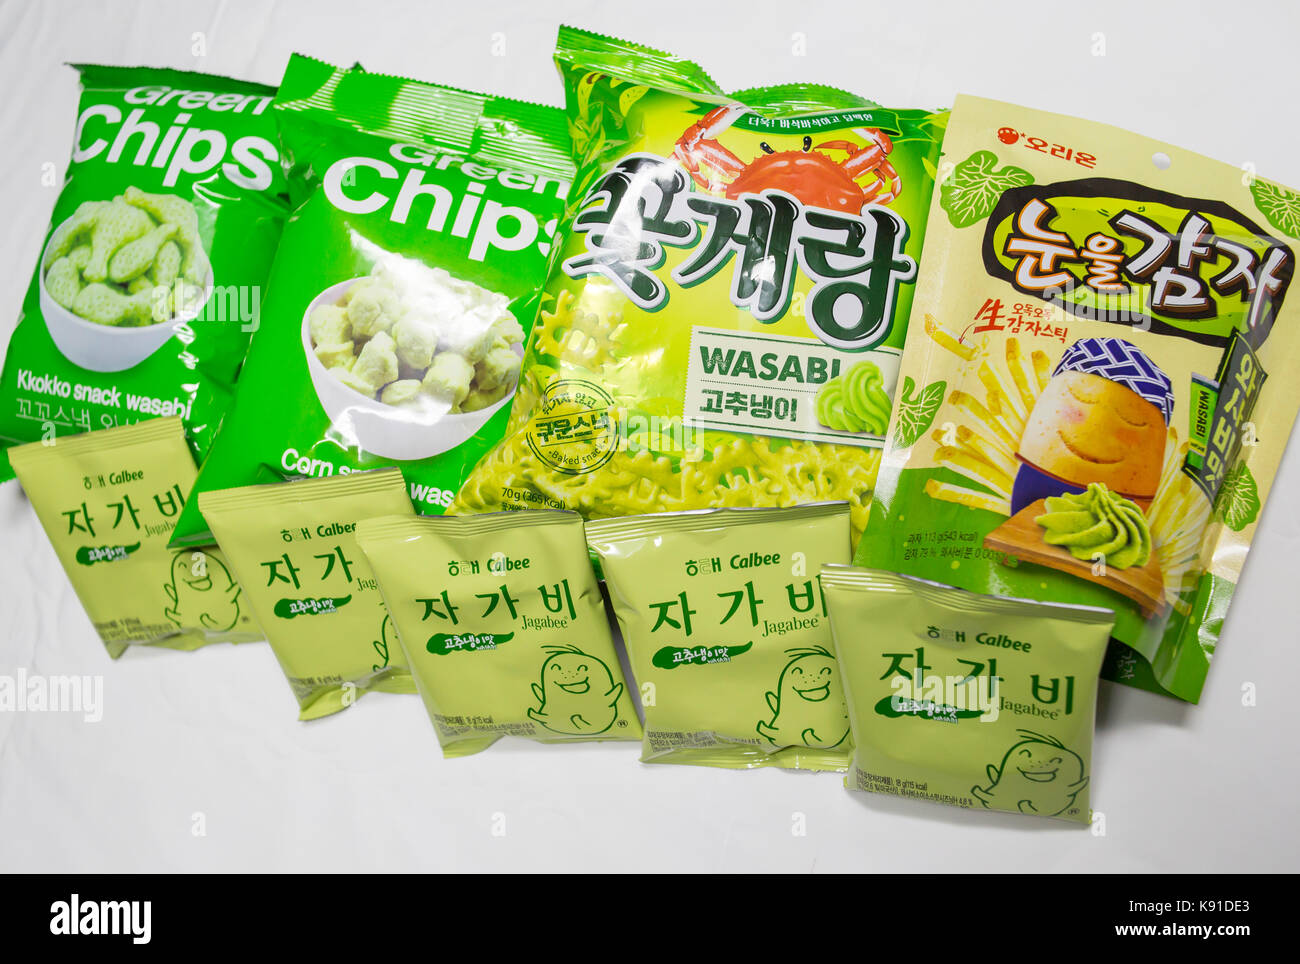 Wasabi-flavored Korean snacks, Sep 20, 2017 : Wasabi-flavored Korean snacks  in Seoul, South Korea. Credit: Lee Jae-Won/AFLO/Alamy Live News Stock Photo  - Alamy